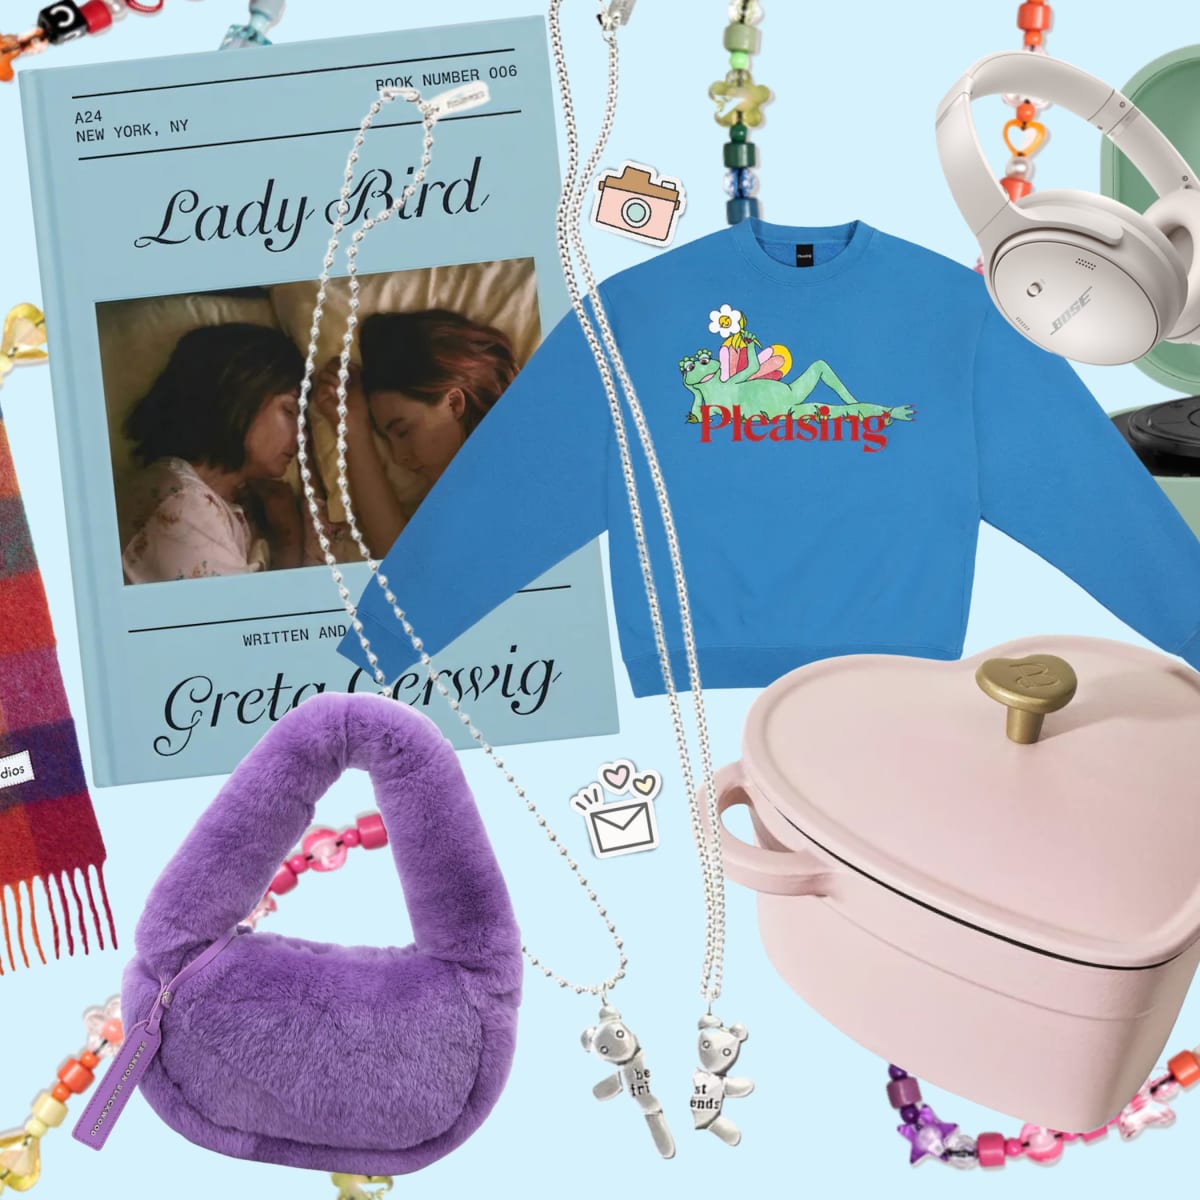 Gen Z Girl Gift Guide: What To Buy According To Gen Z Girlies